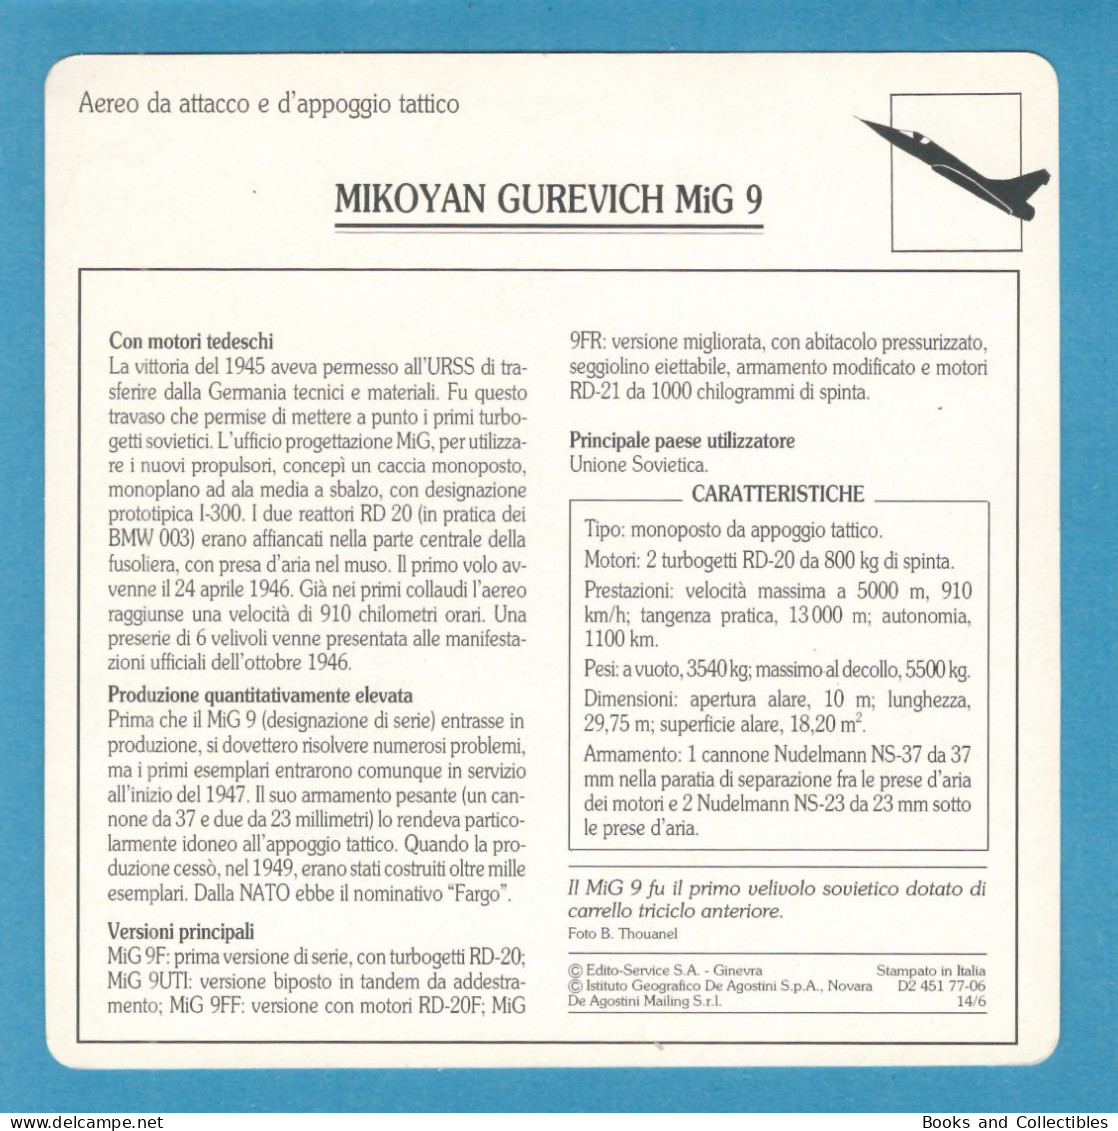 DeAgostini Educational Sheet "Warplanes" / MIKOYAN GUREVICH MiG 9 (U.S.S.R.) - Aviation